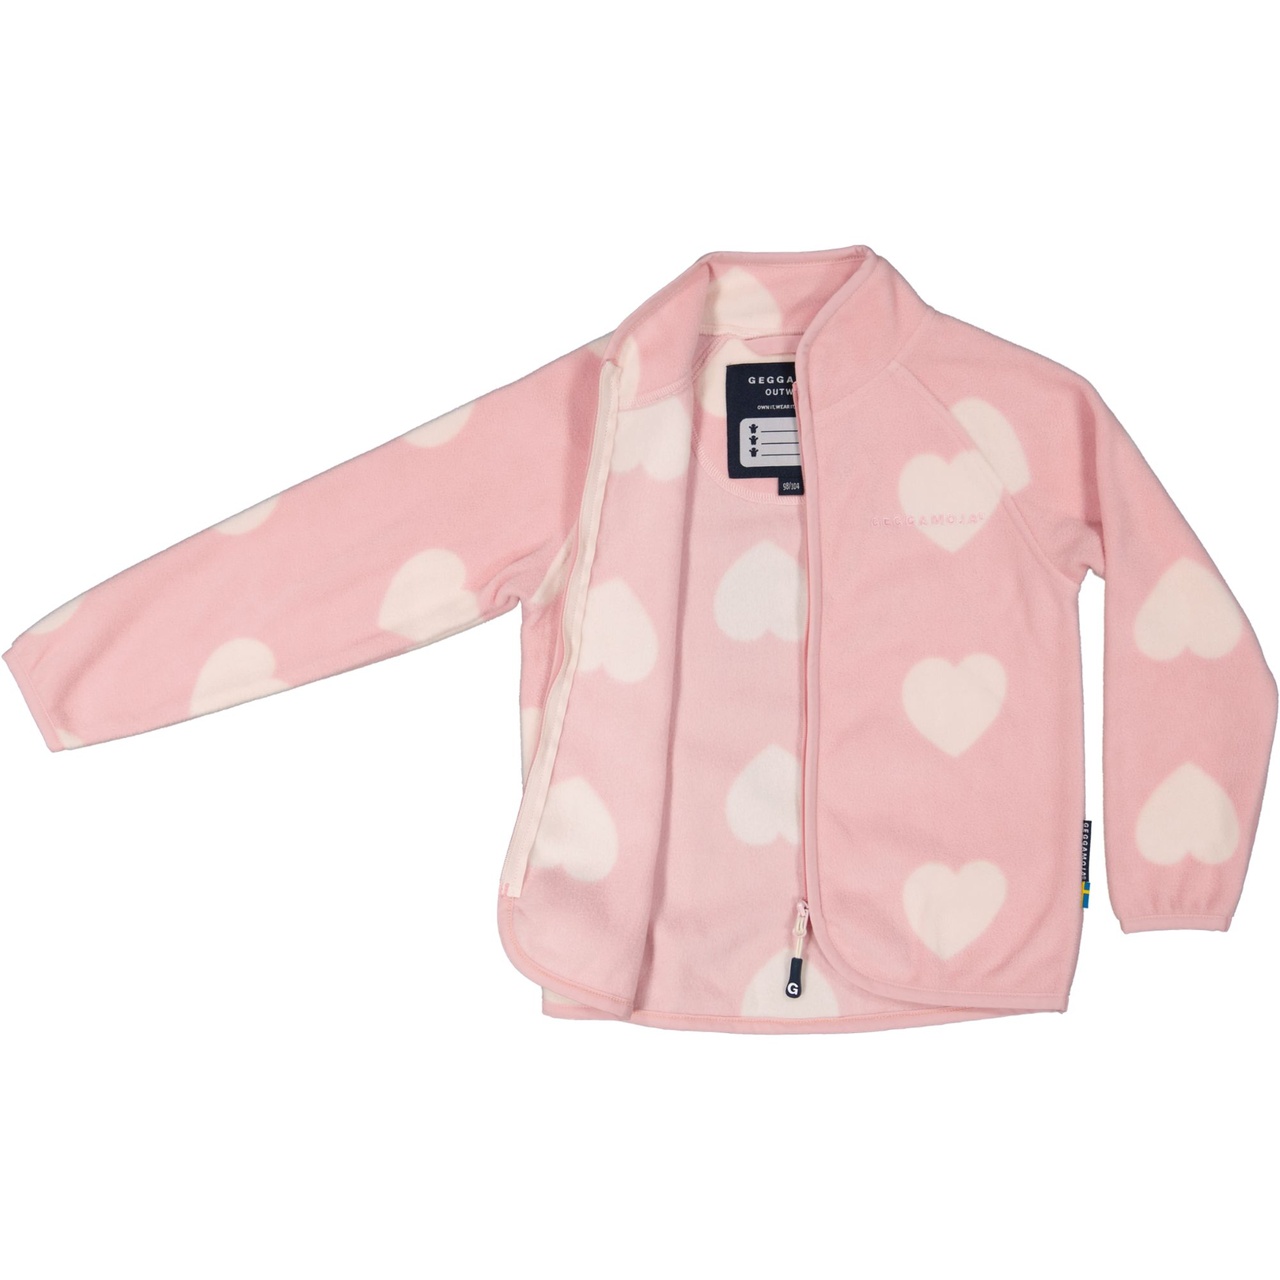 Single fleece set Pink Heart 110/116